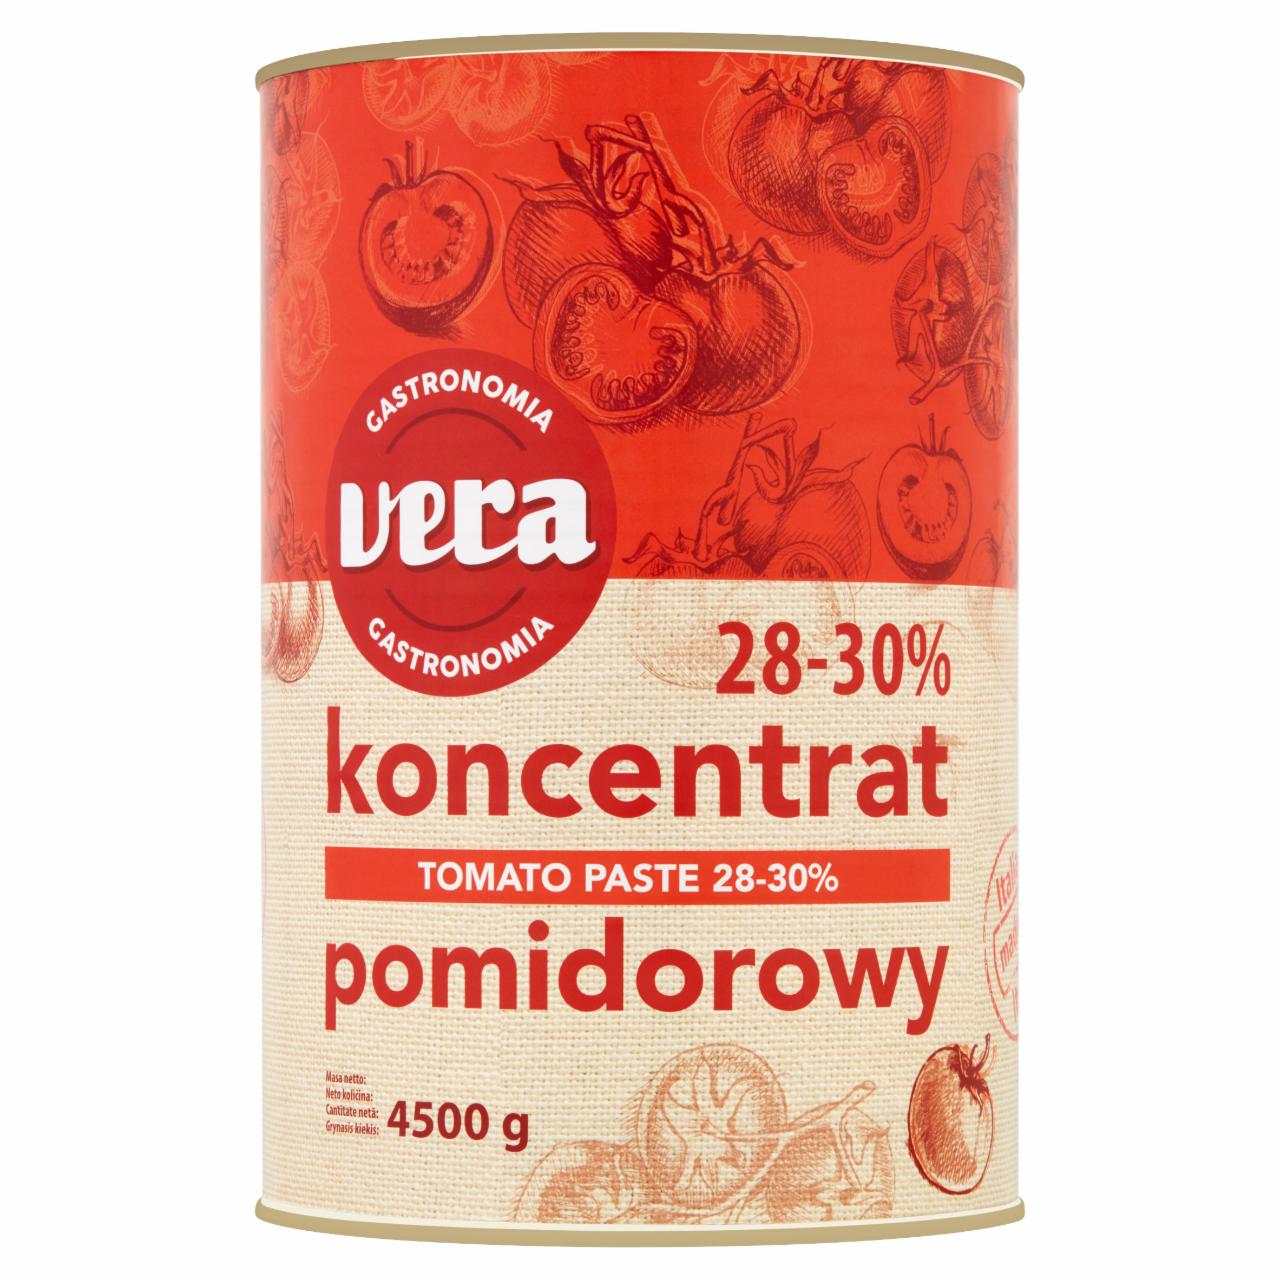 Zdjęcia - Vera Gastronomia Koncentrat pomidorowy 28-30% 4500 g